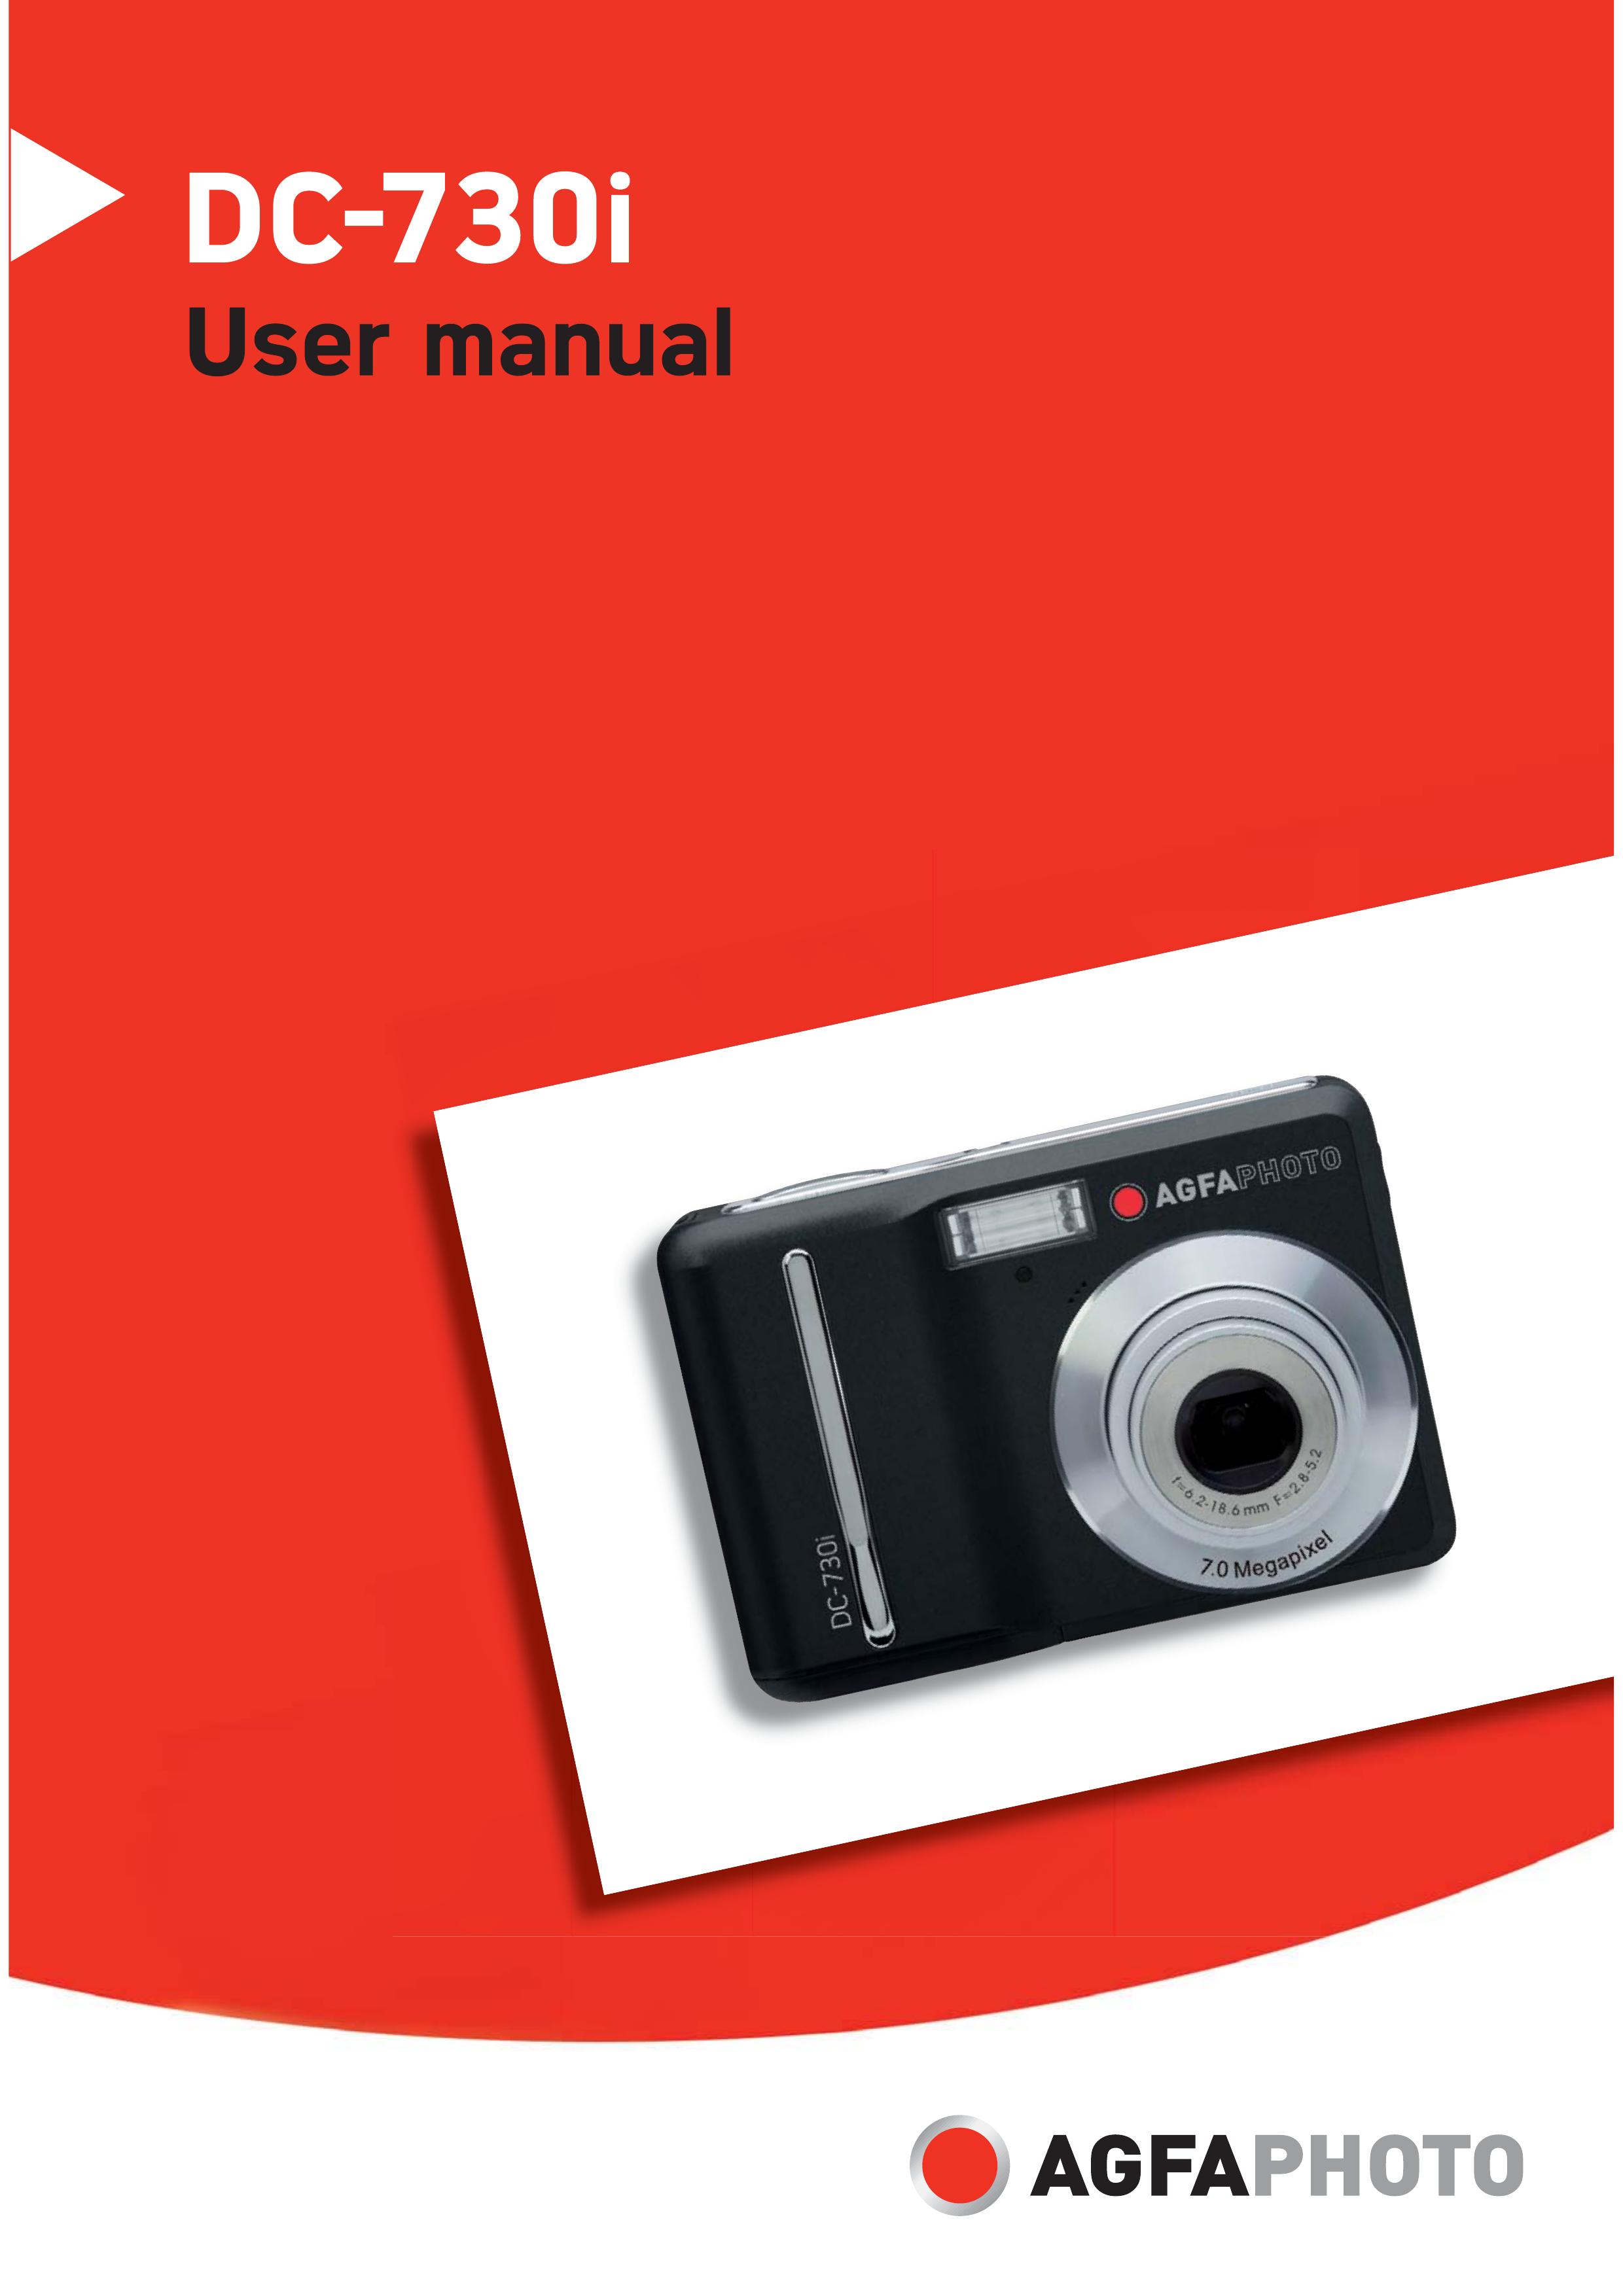 AGFA DC-730i Digital Camera User Manual